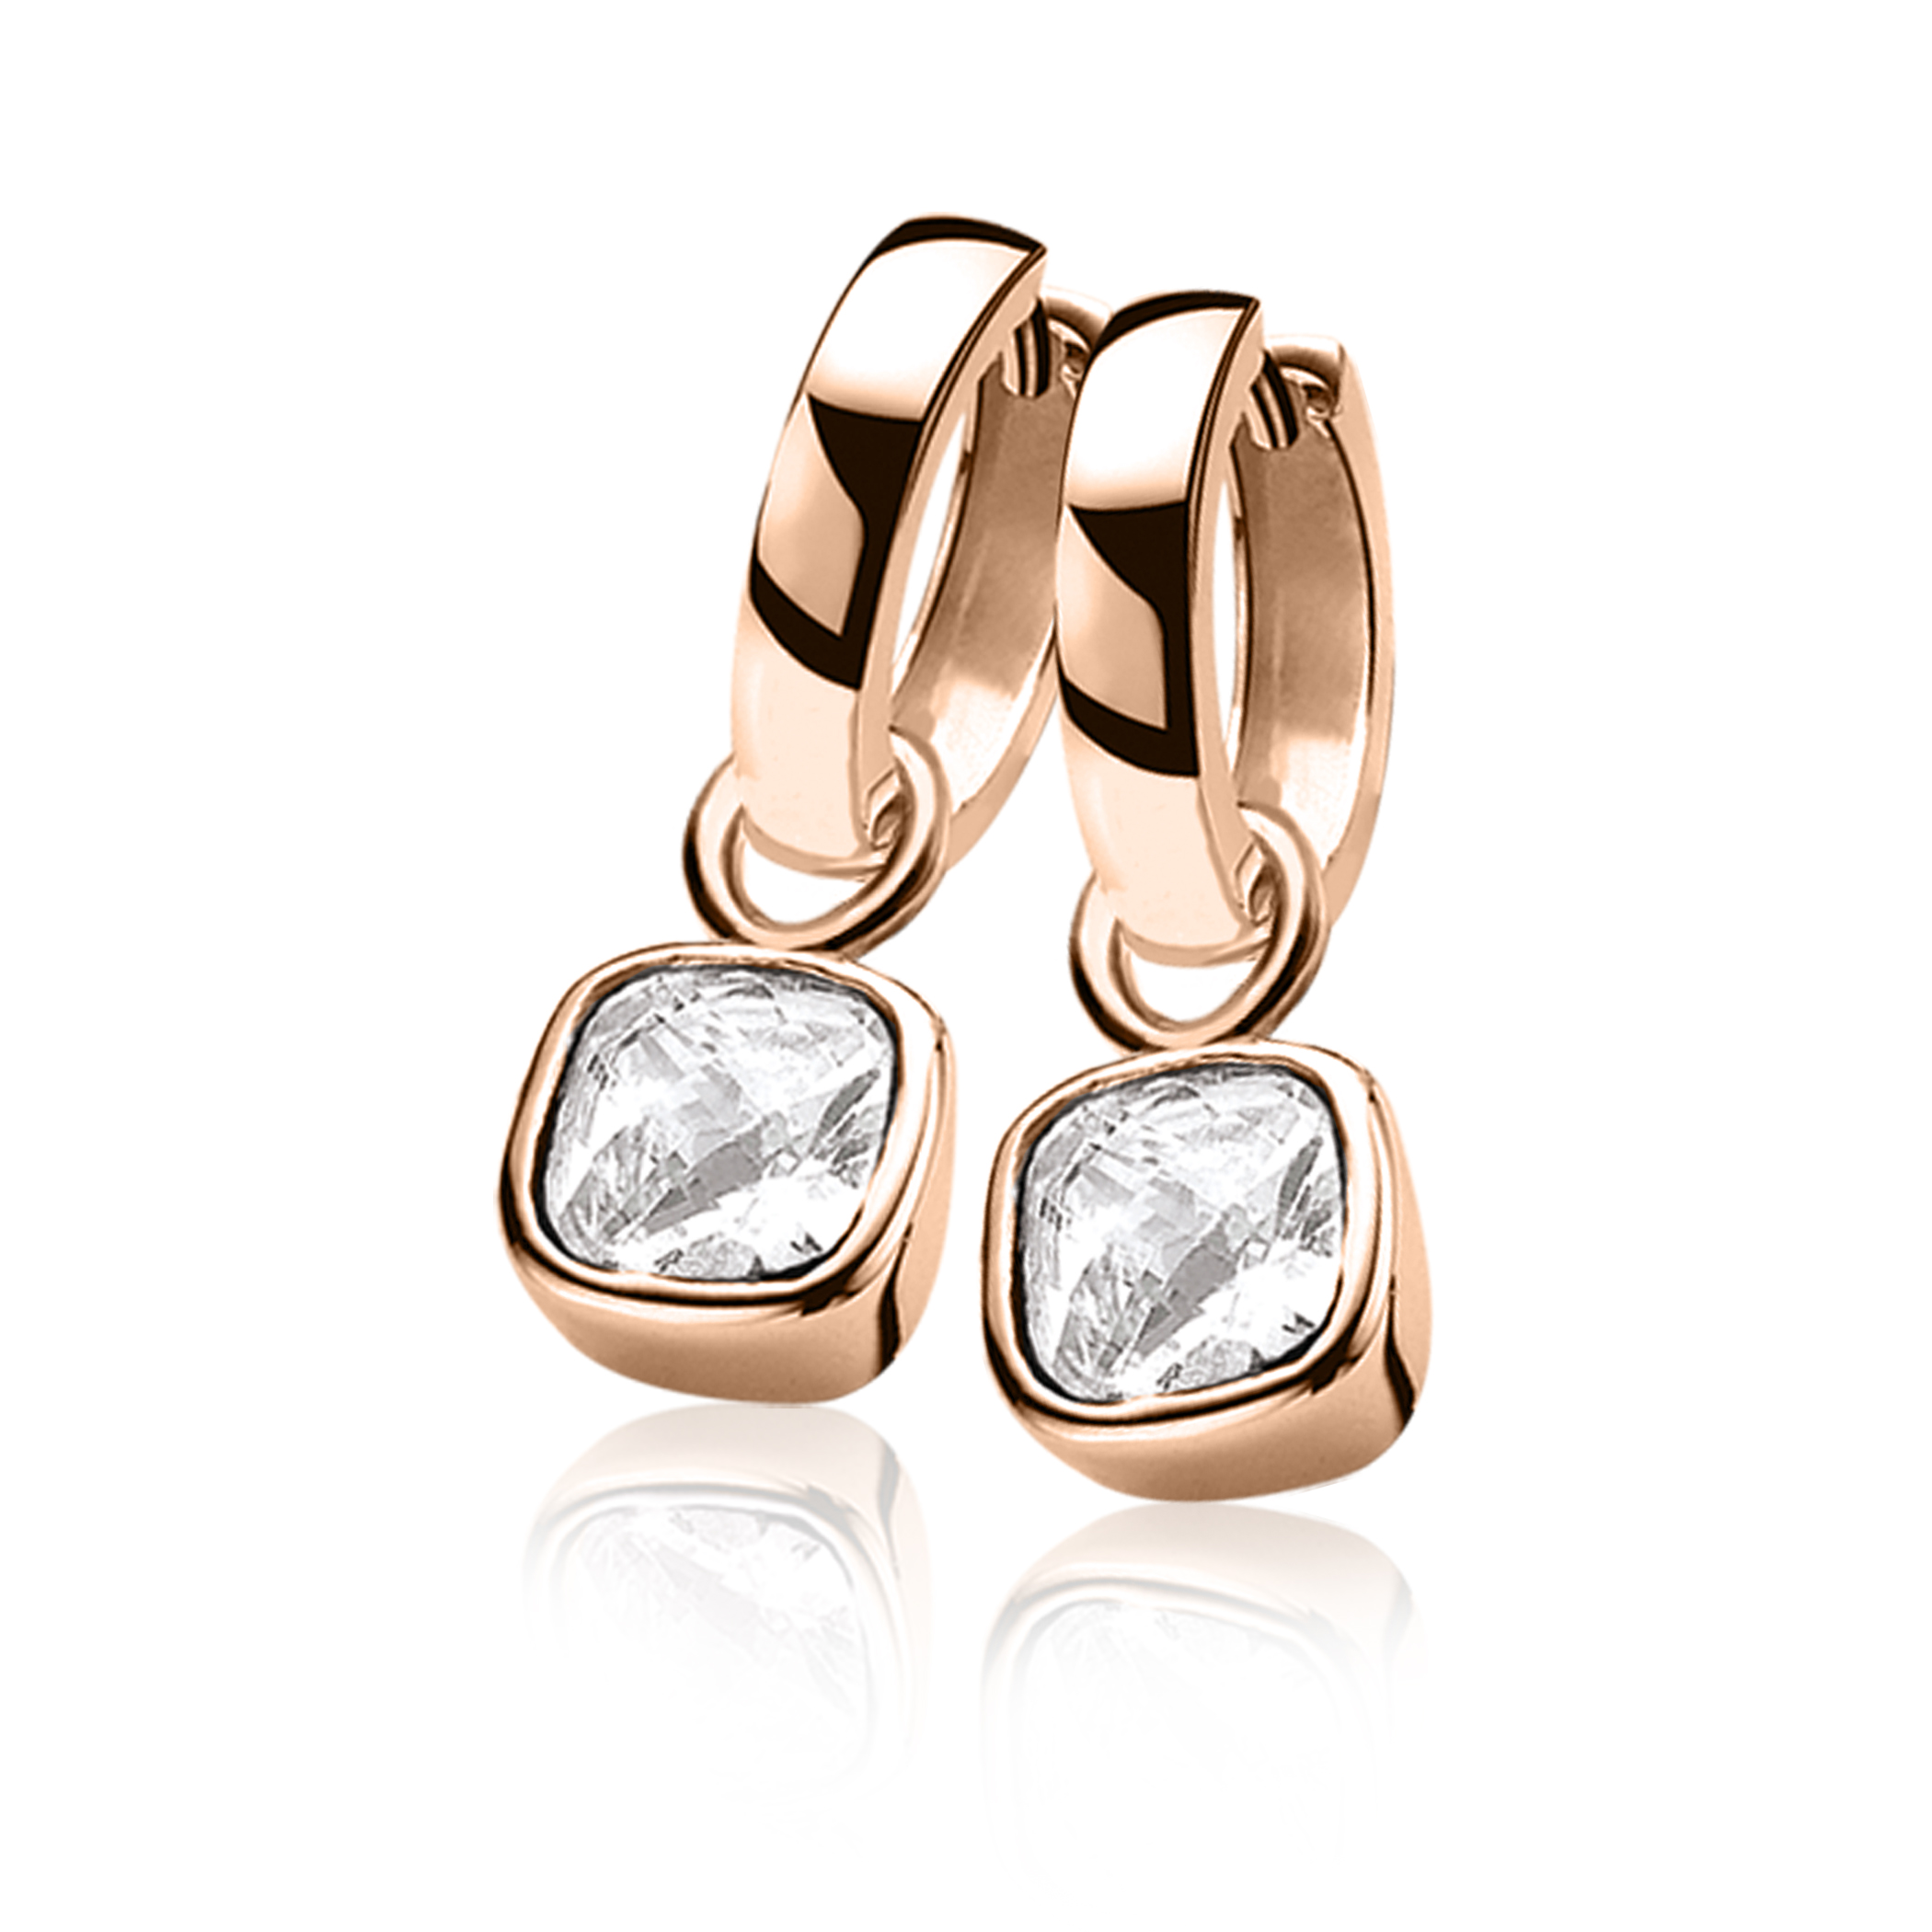 ZINZI Rose Plated Sterling Silver Earrings Pendants White ZICH190D (excl. hoop earrings)